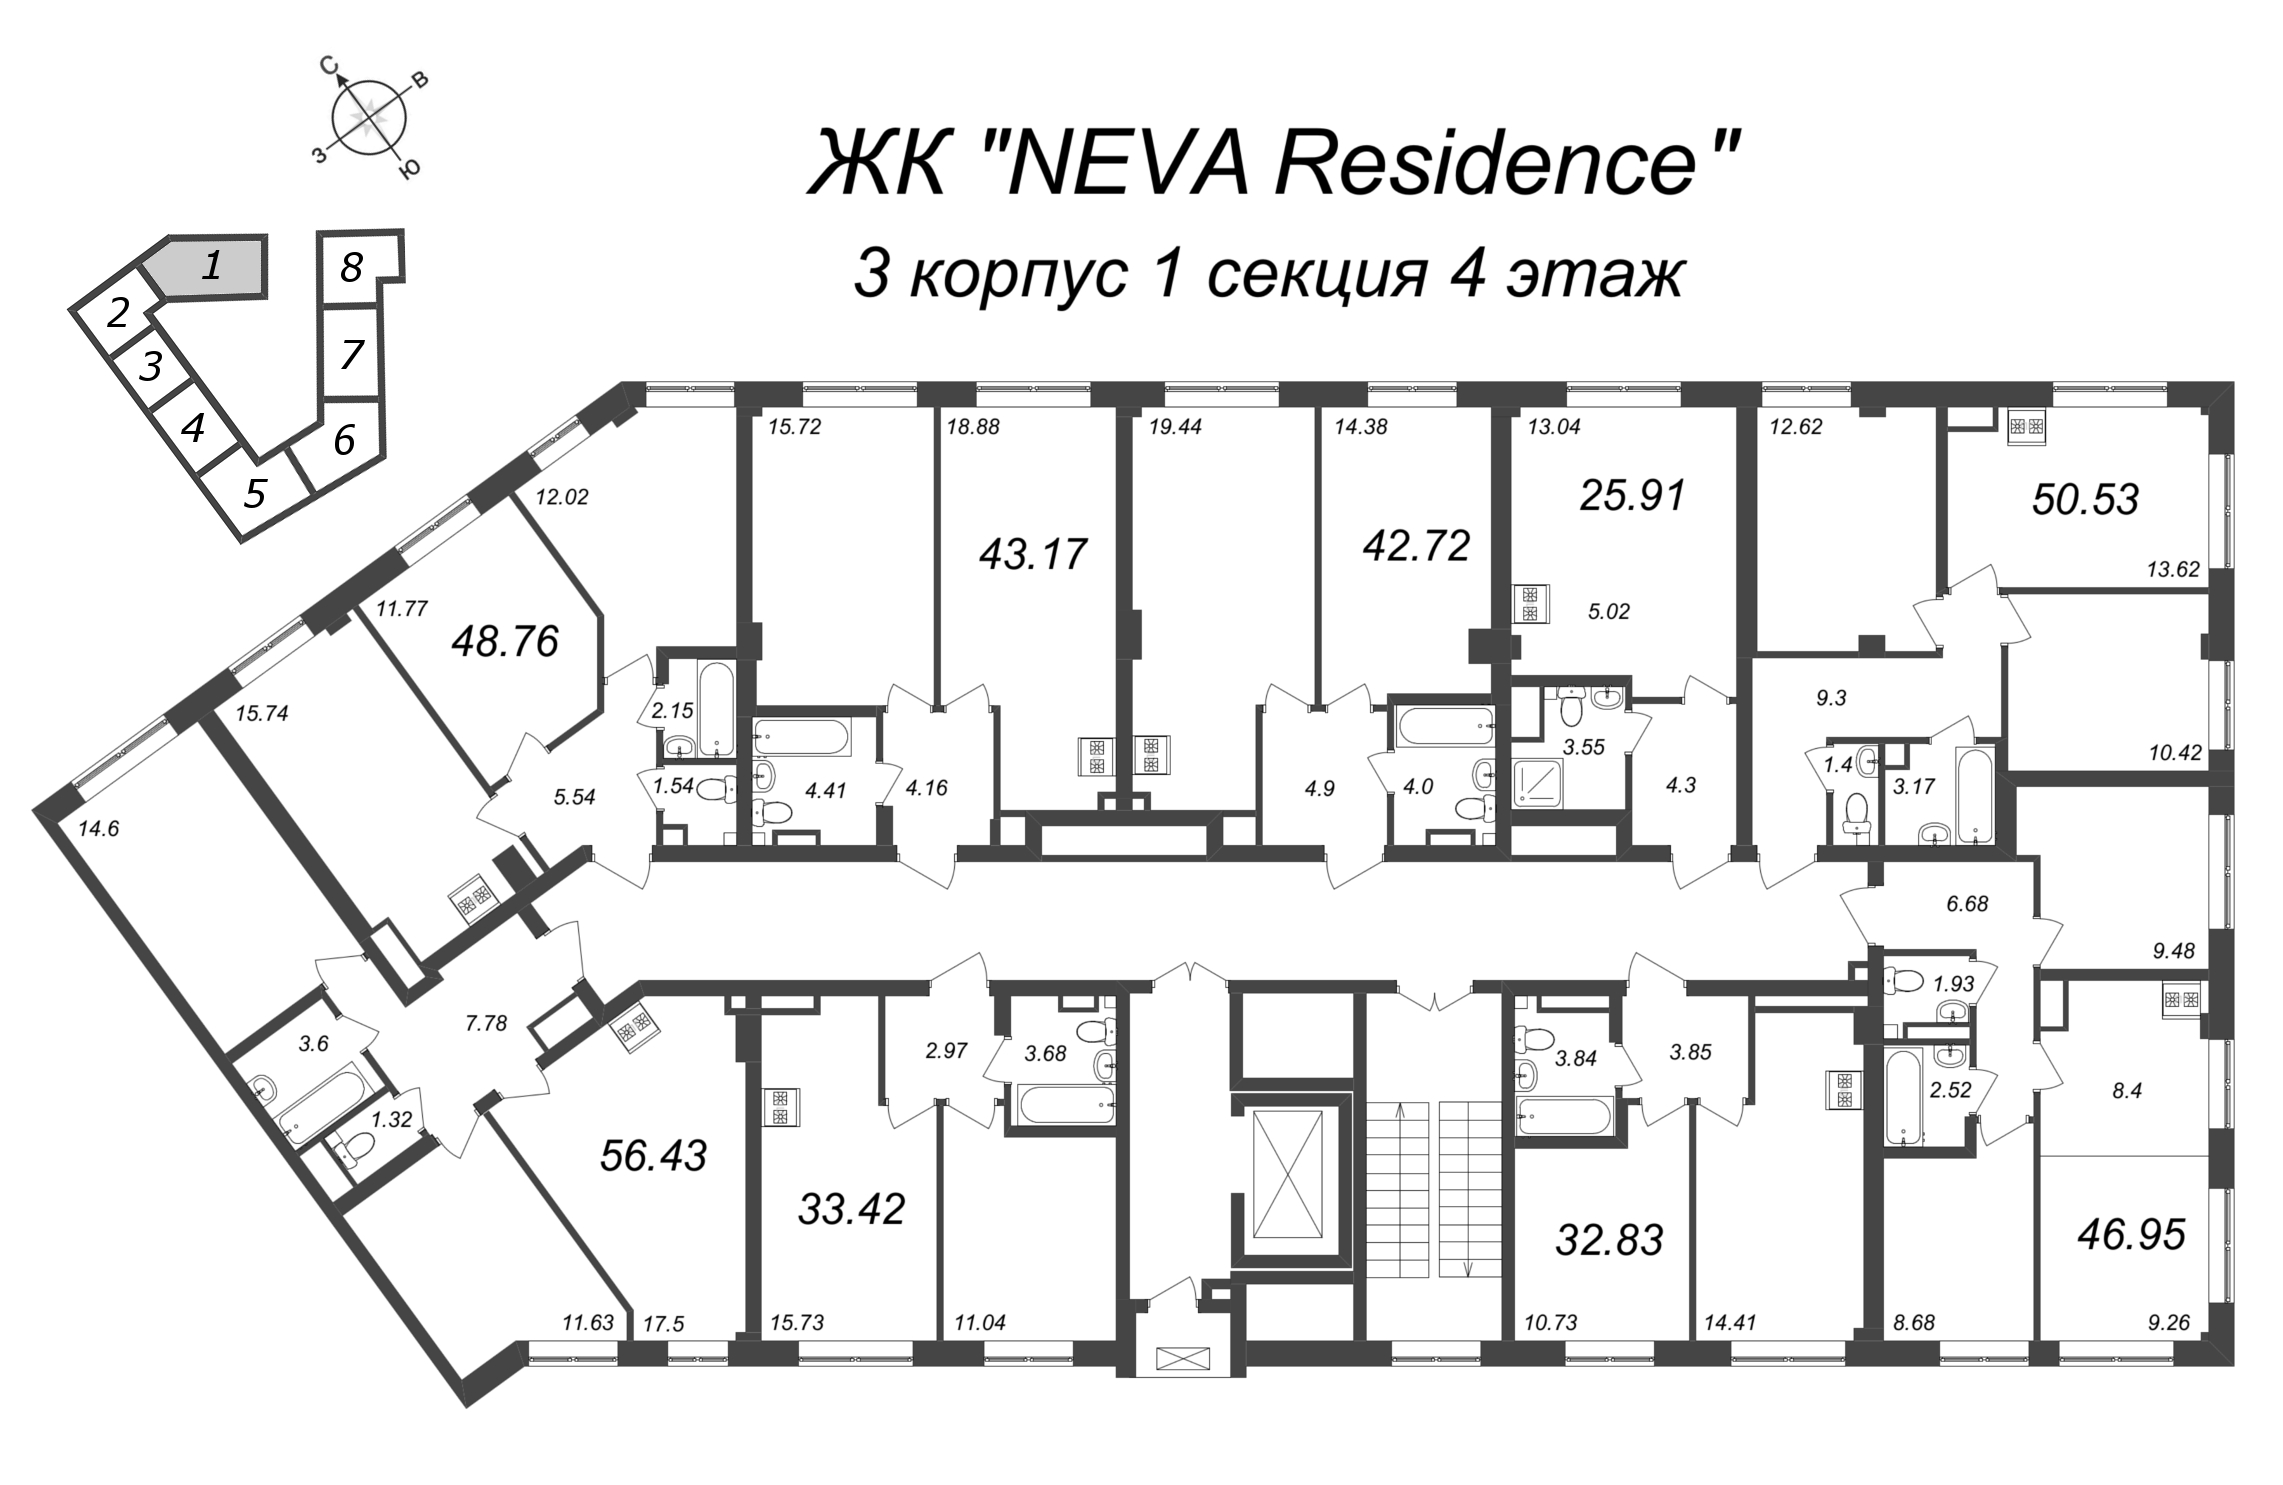 2-комнатная (Евро) квартира, 43.17 м² - планировка этажа